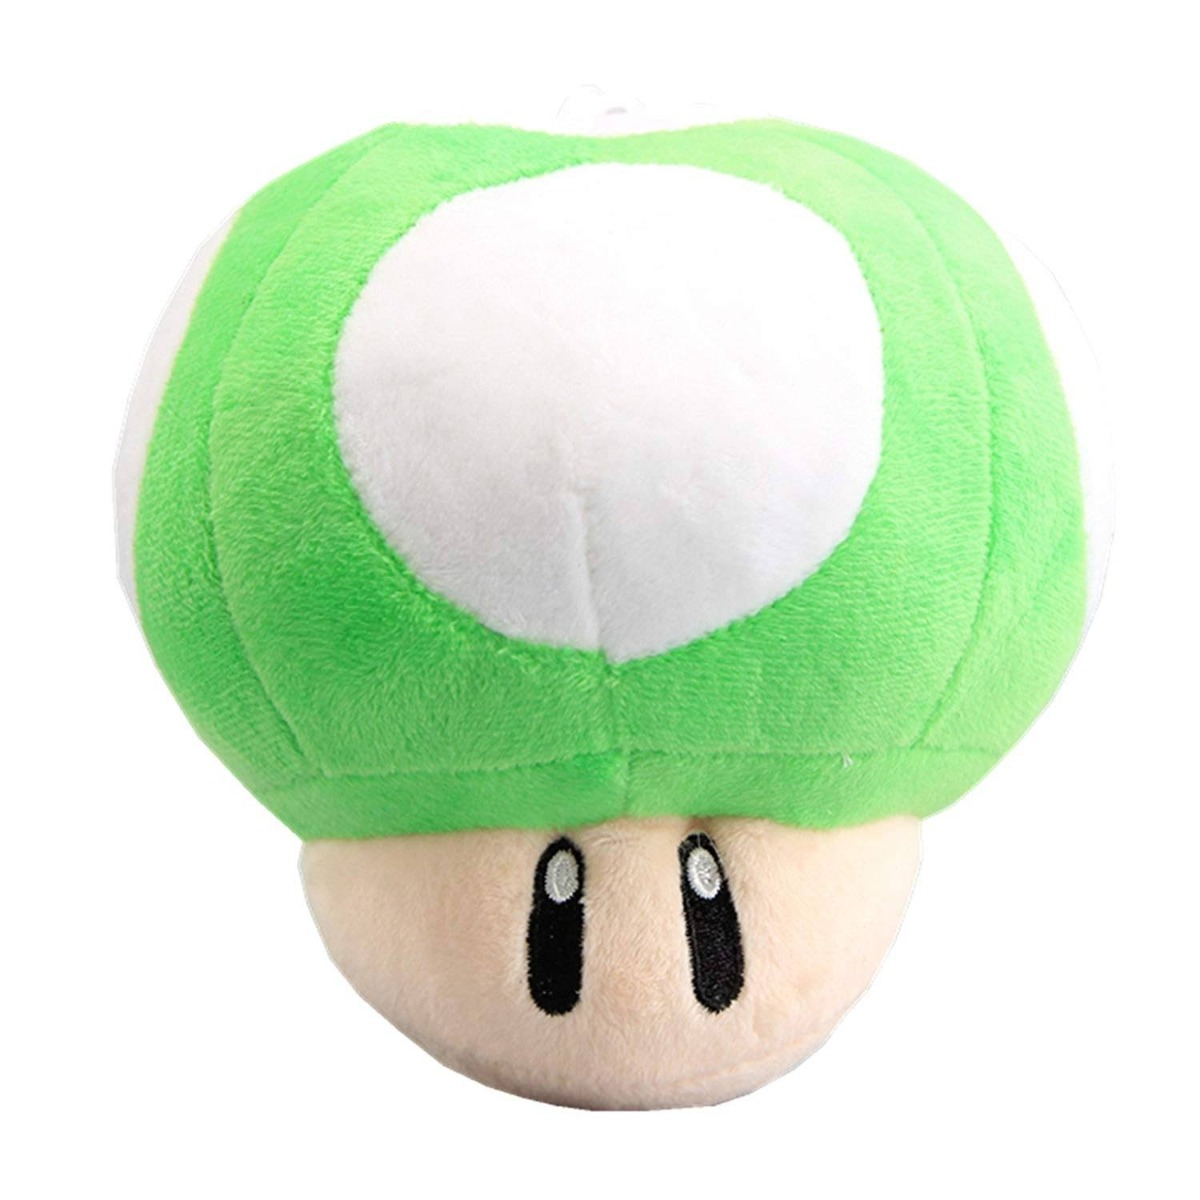 Super Mario Extraliv / Power-up Mjukisdjur / Gosedjur - Grön svamp - Large